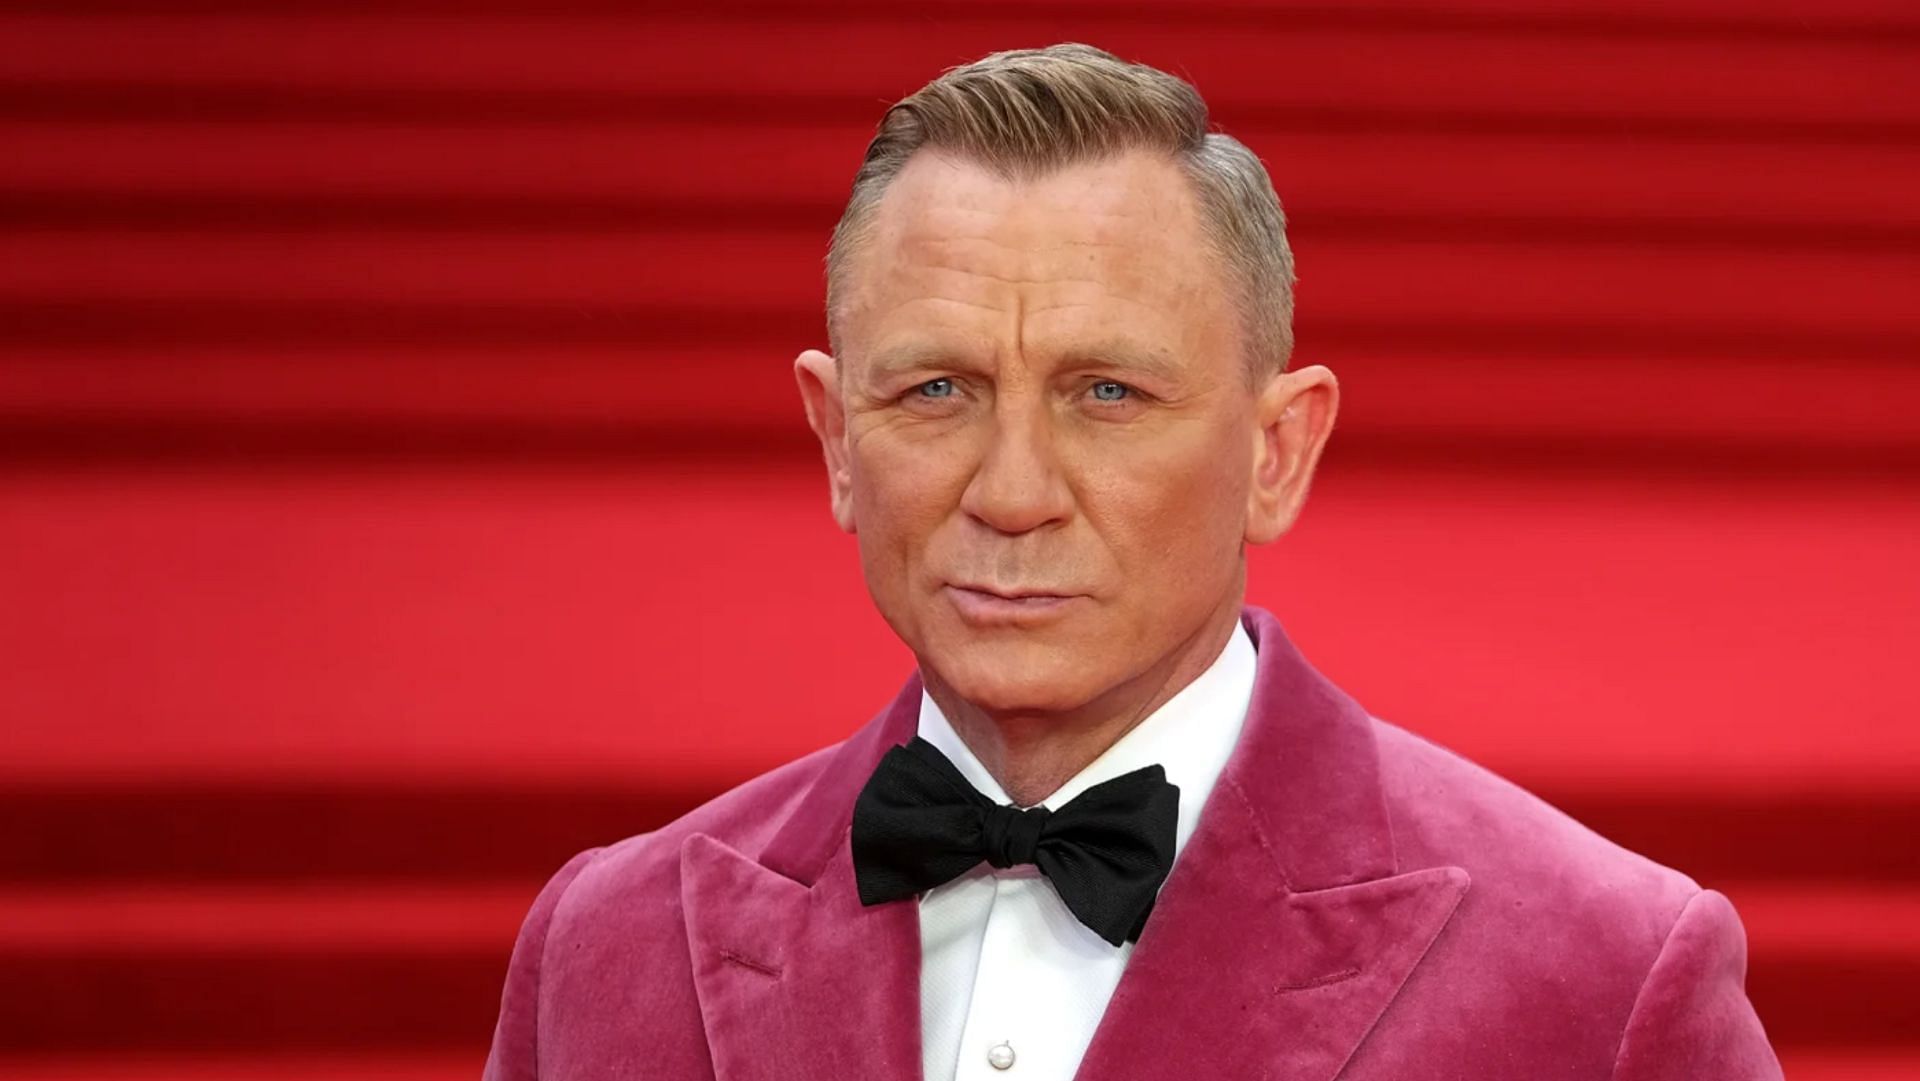 Daniel Craig starred as James Bond in five films of the franchise. (Image via Barcroft Media/Getty)